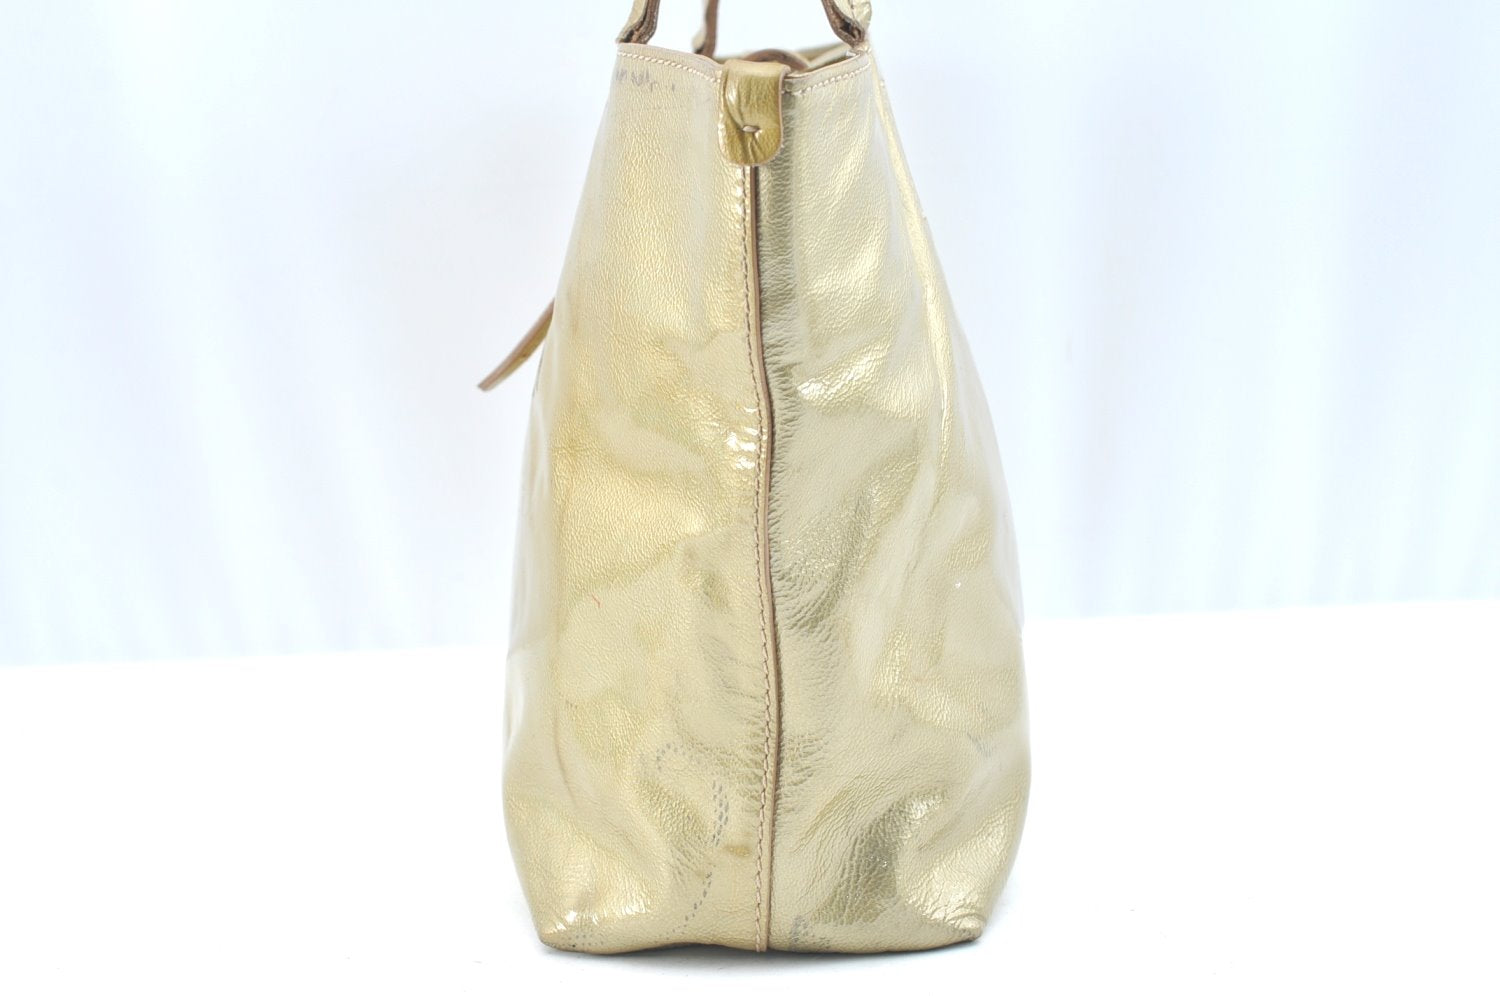 Authentic Salvatore Ferragamo Vintage Gancini Tote Hand Bag PVC Gold Junk K5687